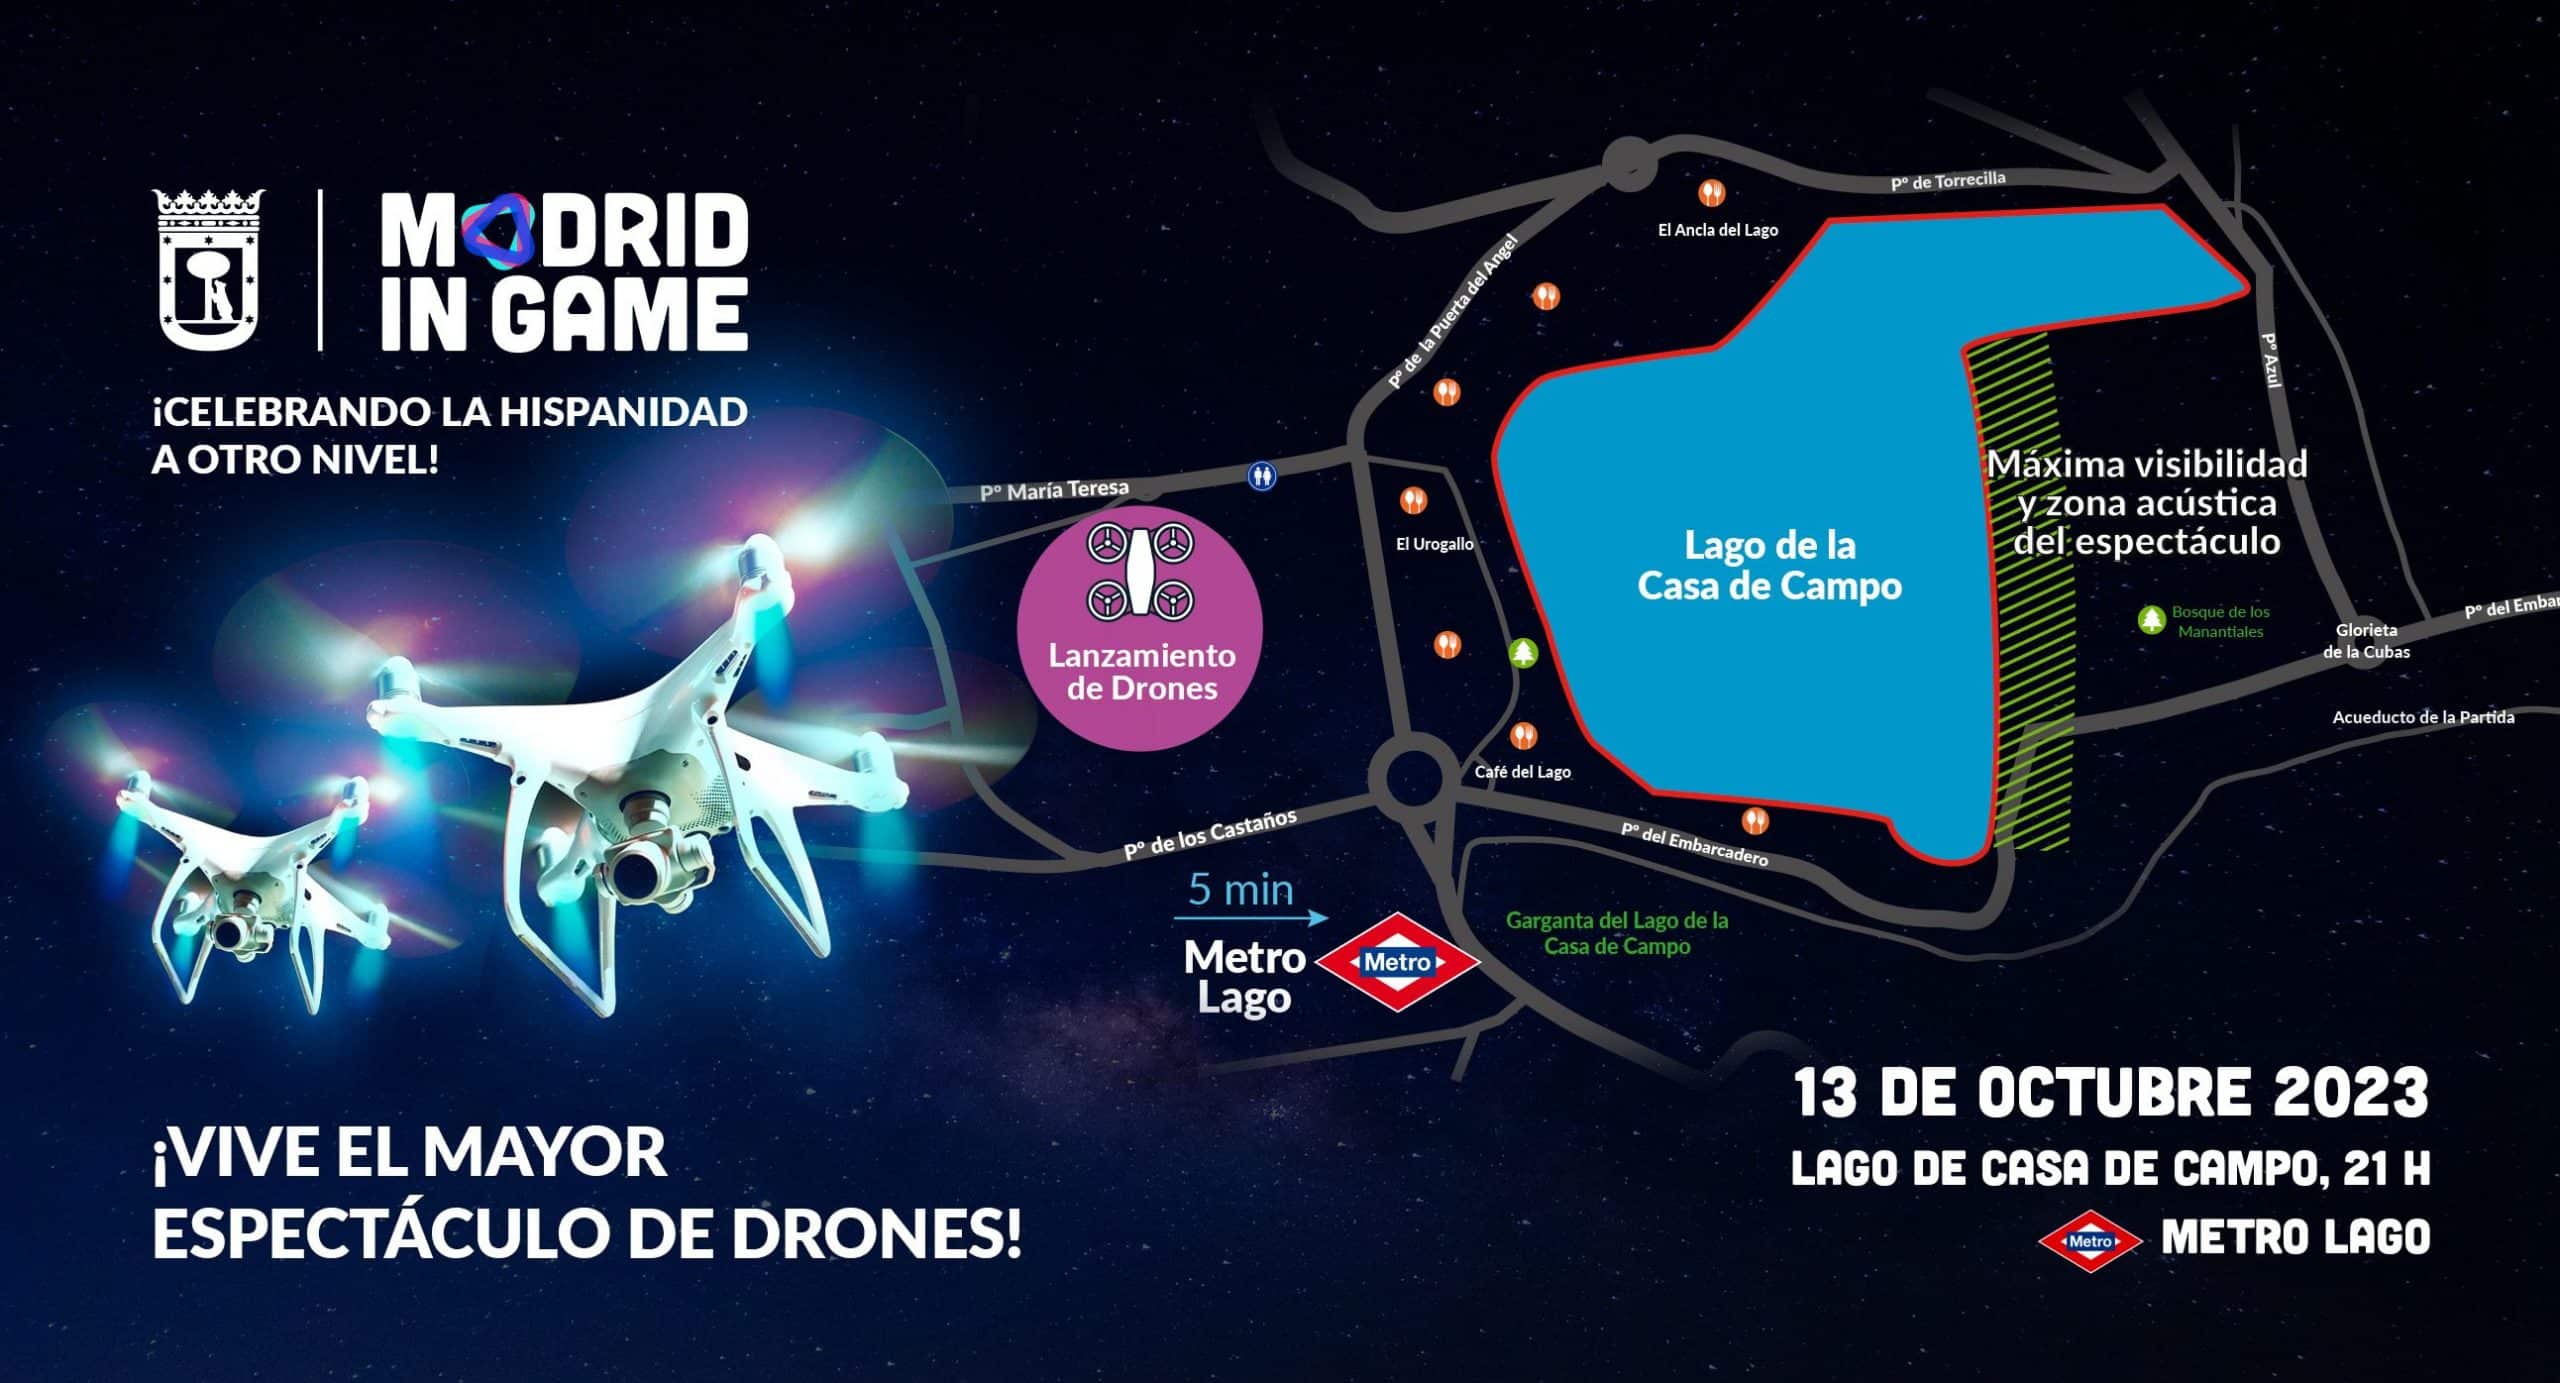 drones madrid dia de la hispanidad